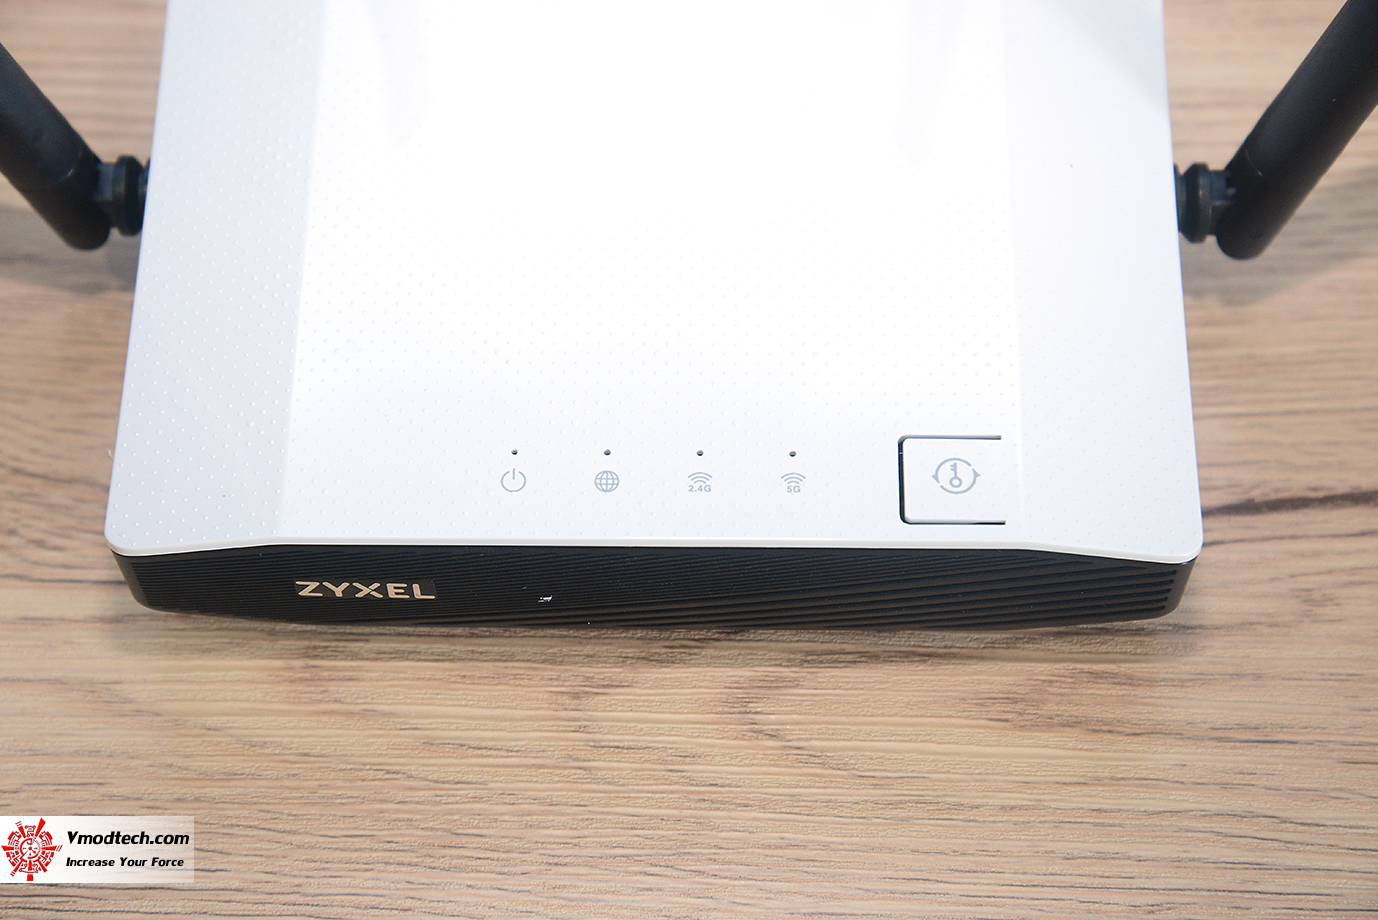 dsc 2468 ZYXEL AC1200 MU MIMO Dual Band Wireless Gigabit Router (NBG6615) Review